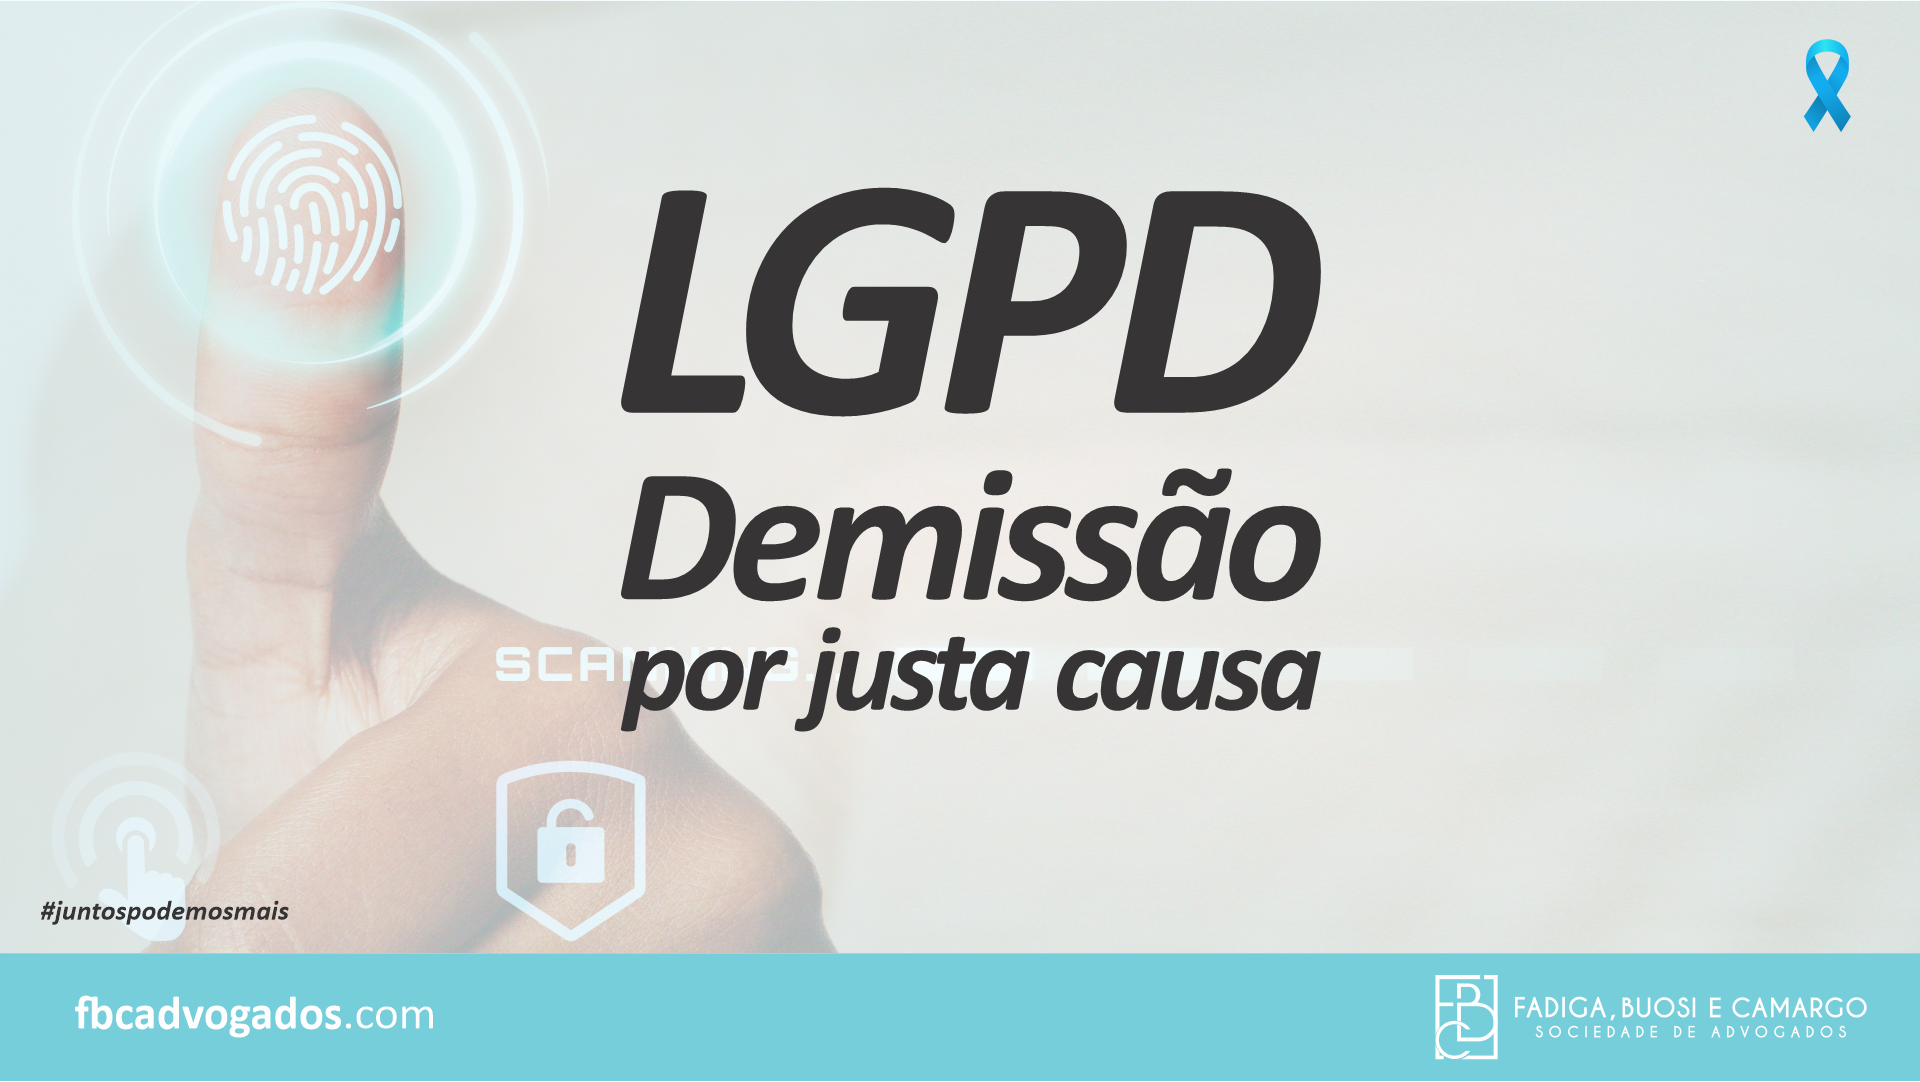 LGPD – Demissão por justa causa